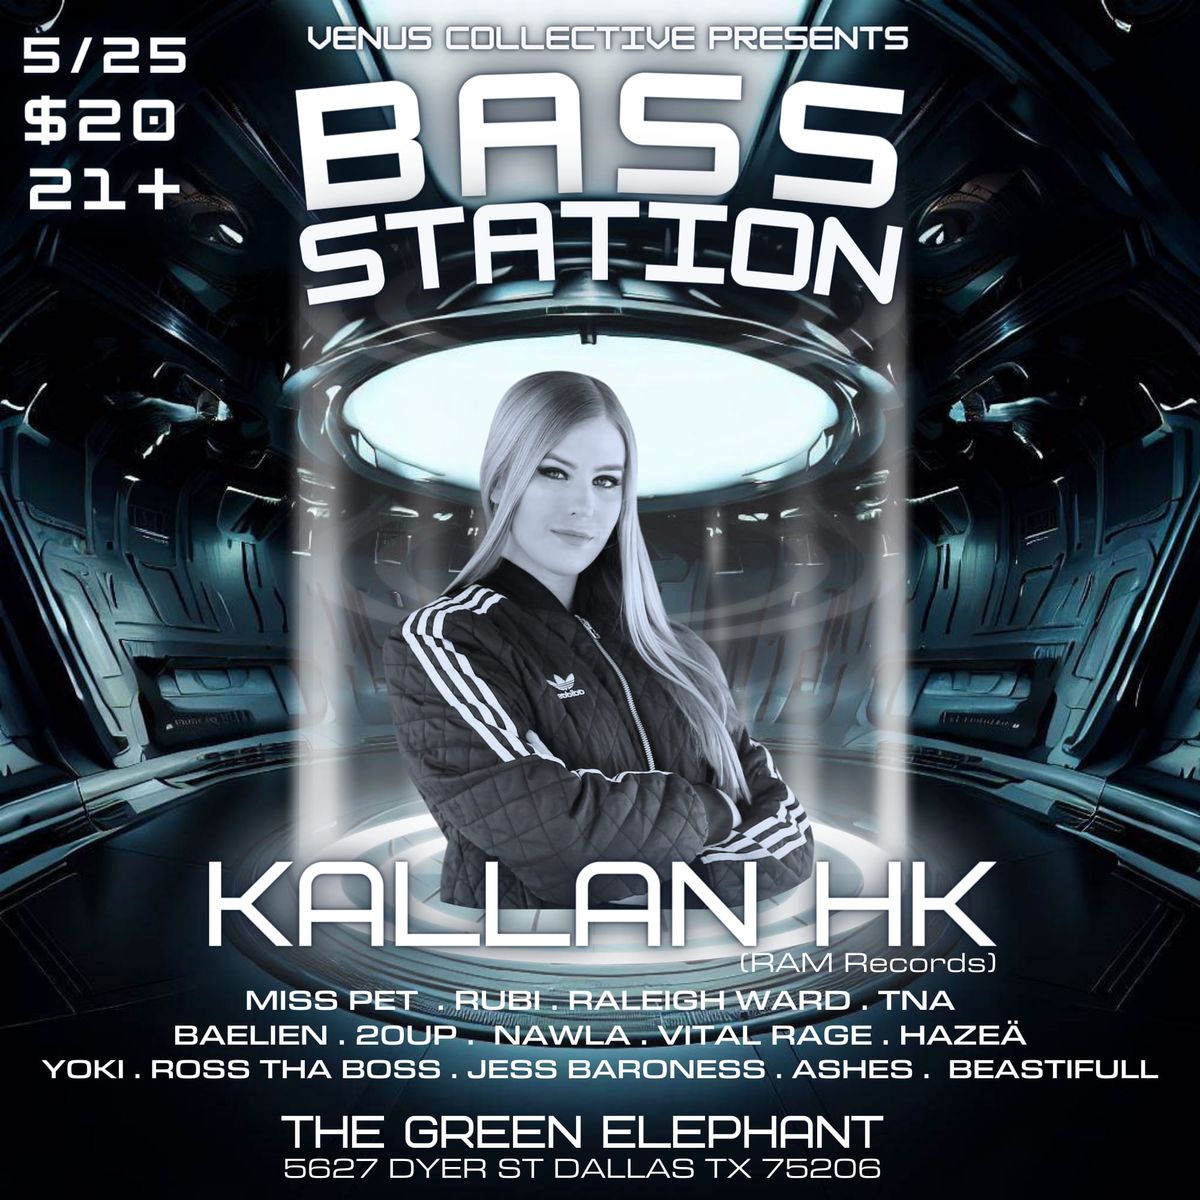 Venus Collective Presents: Bass Station ft. Kallan HK